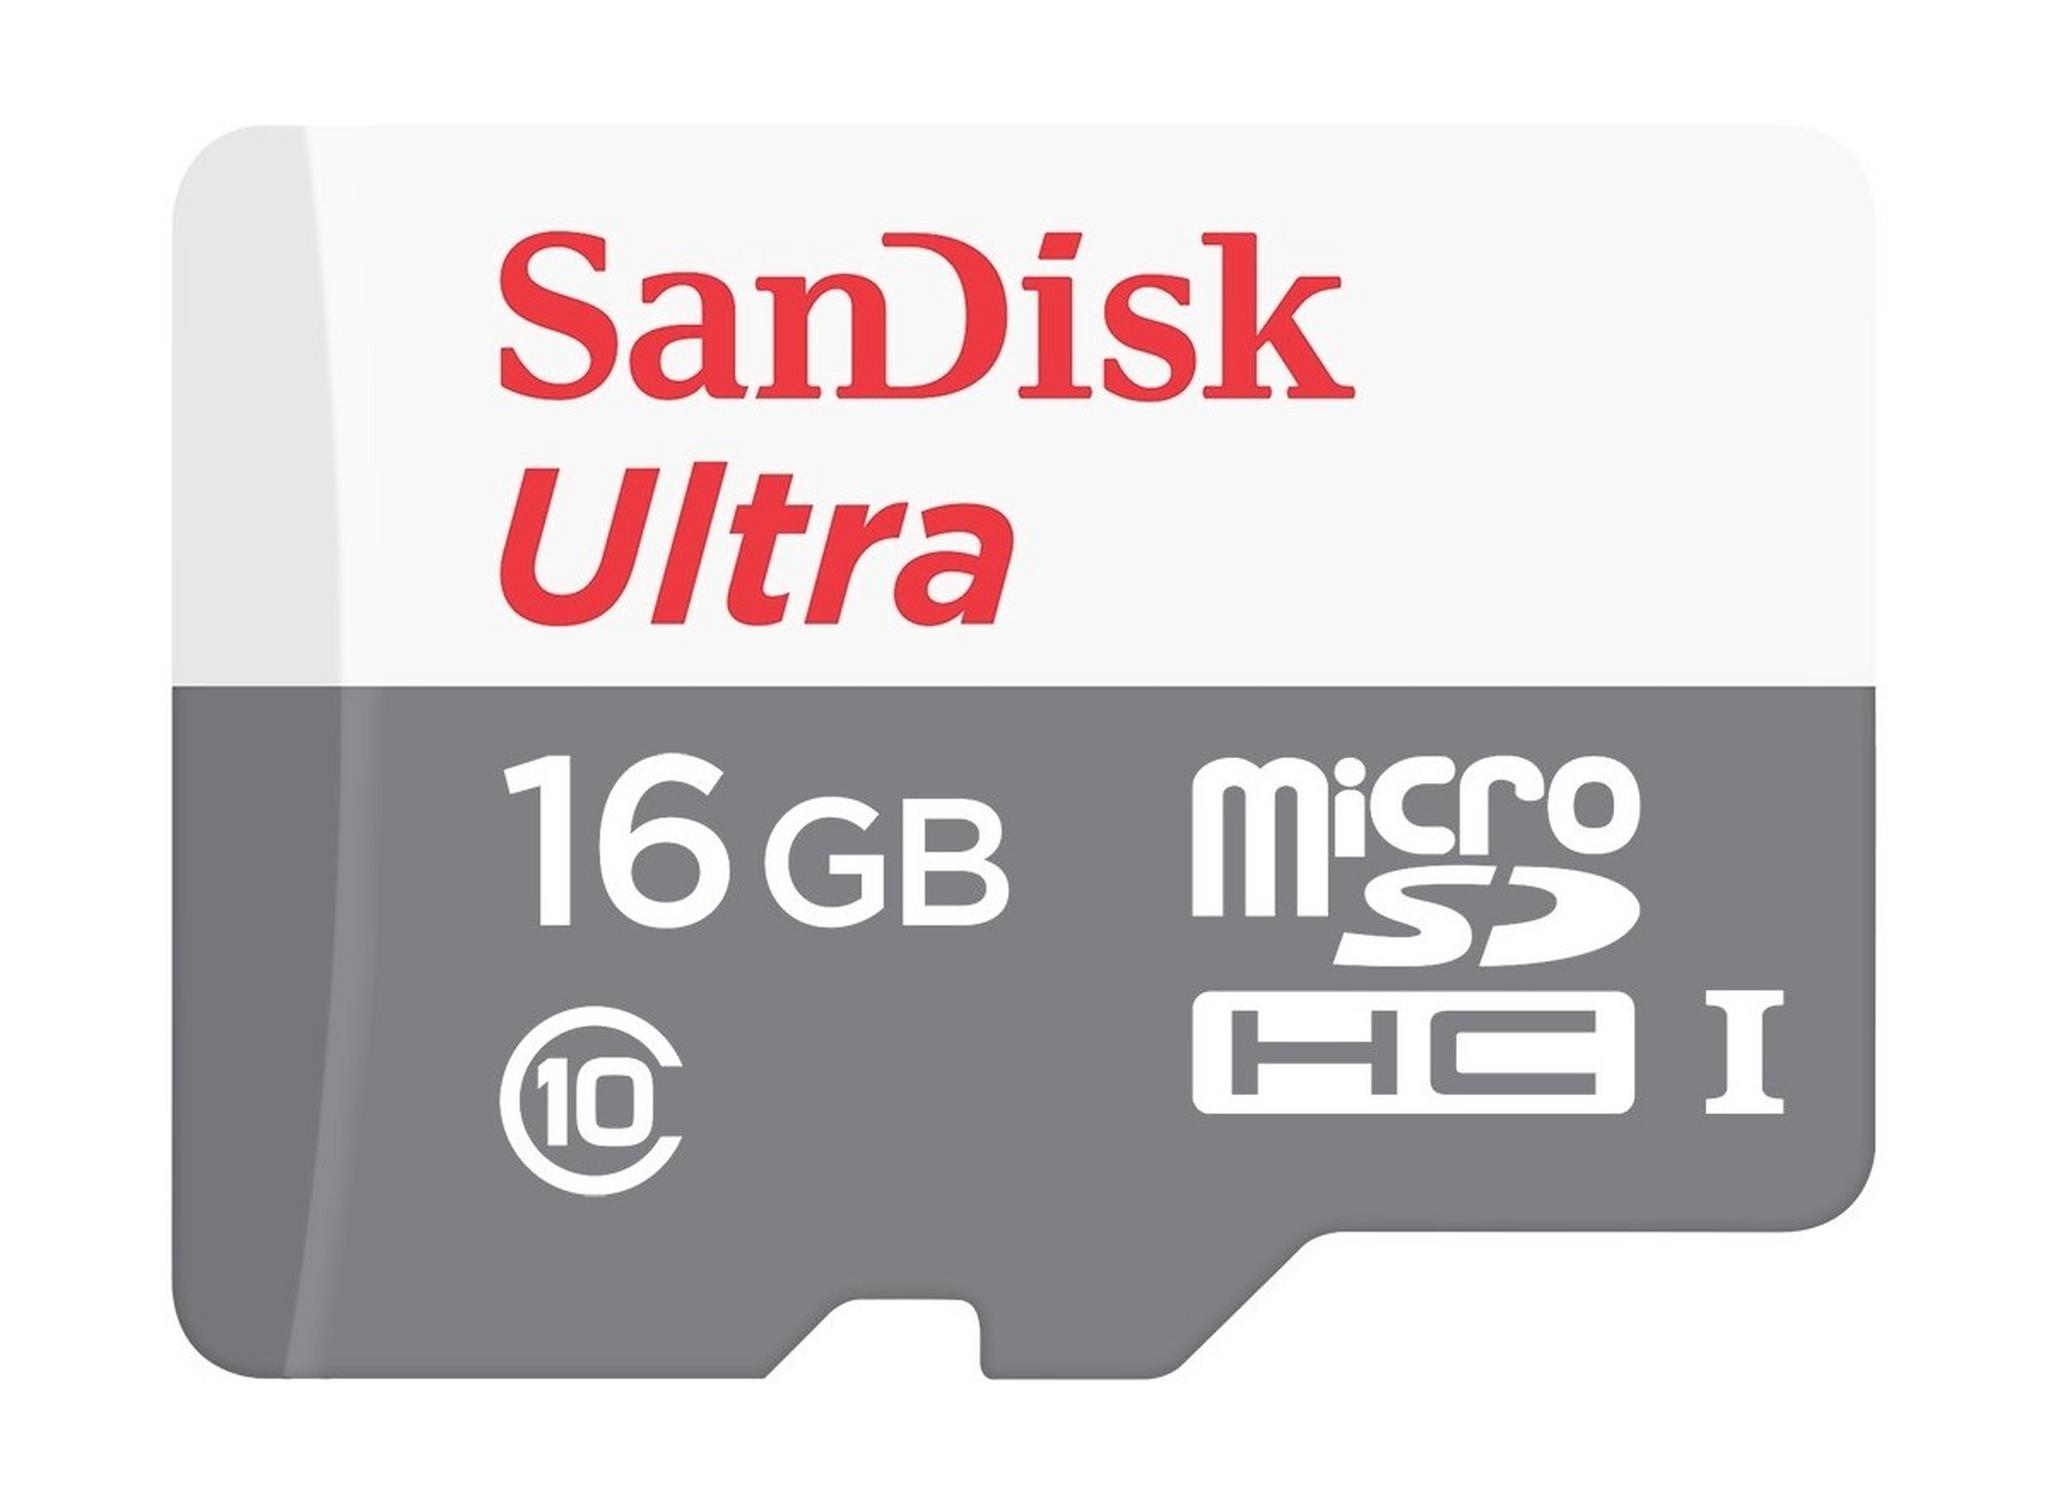 Sandisk 16GB Ultra microSDHC UHS-I Memory Card